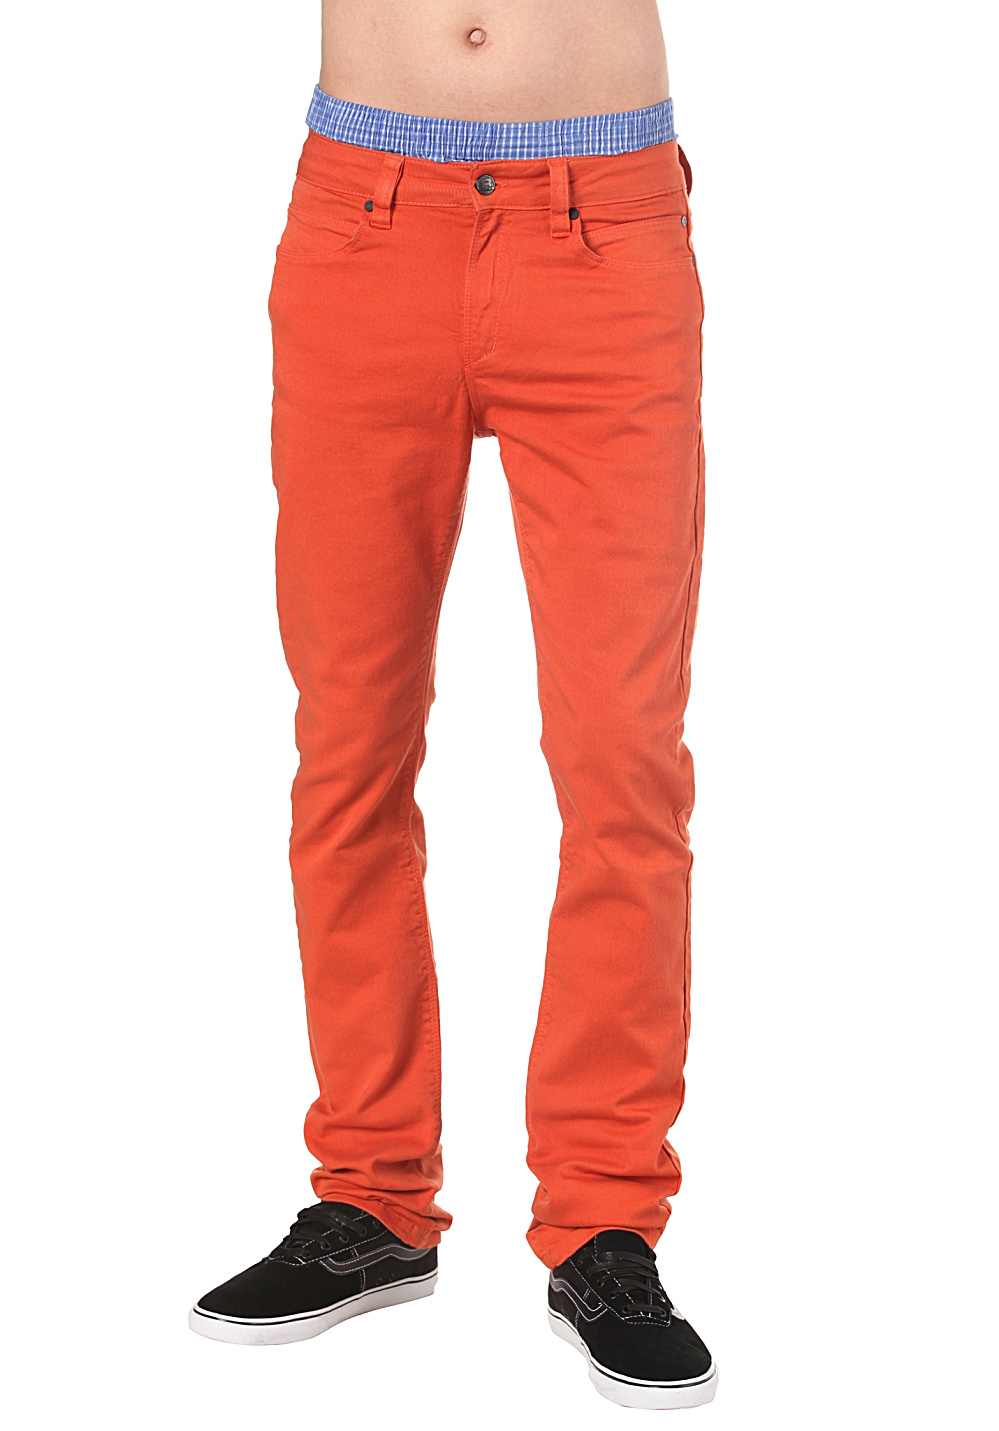 pantalon homme orange